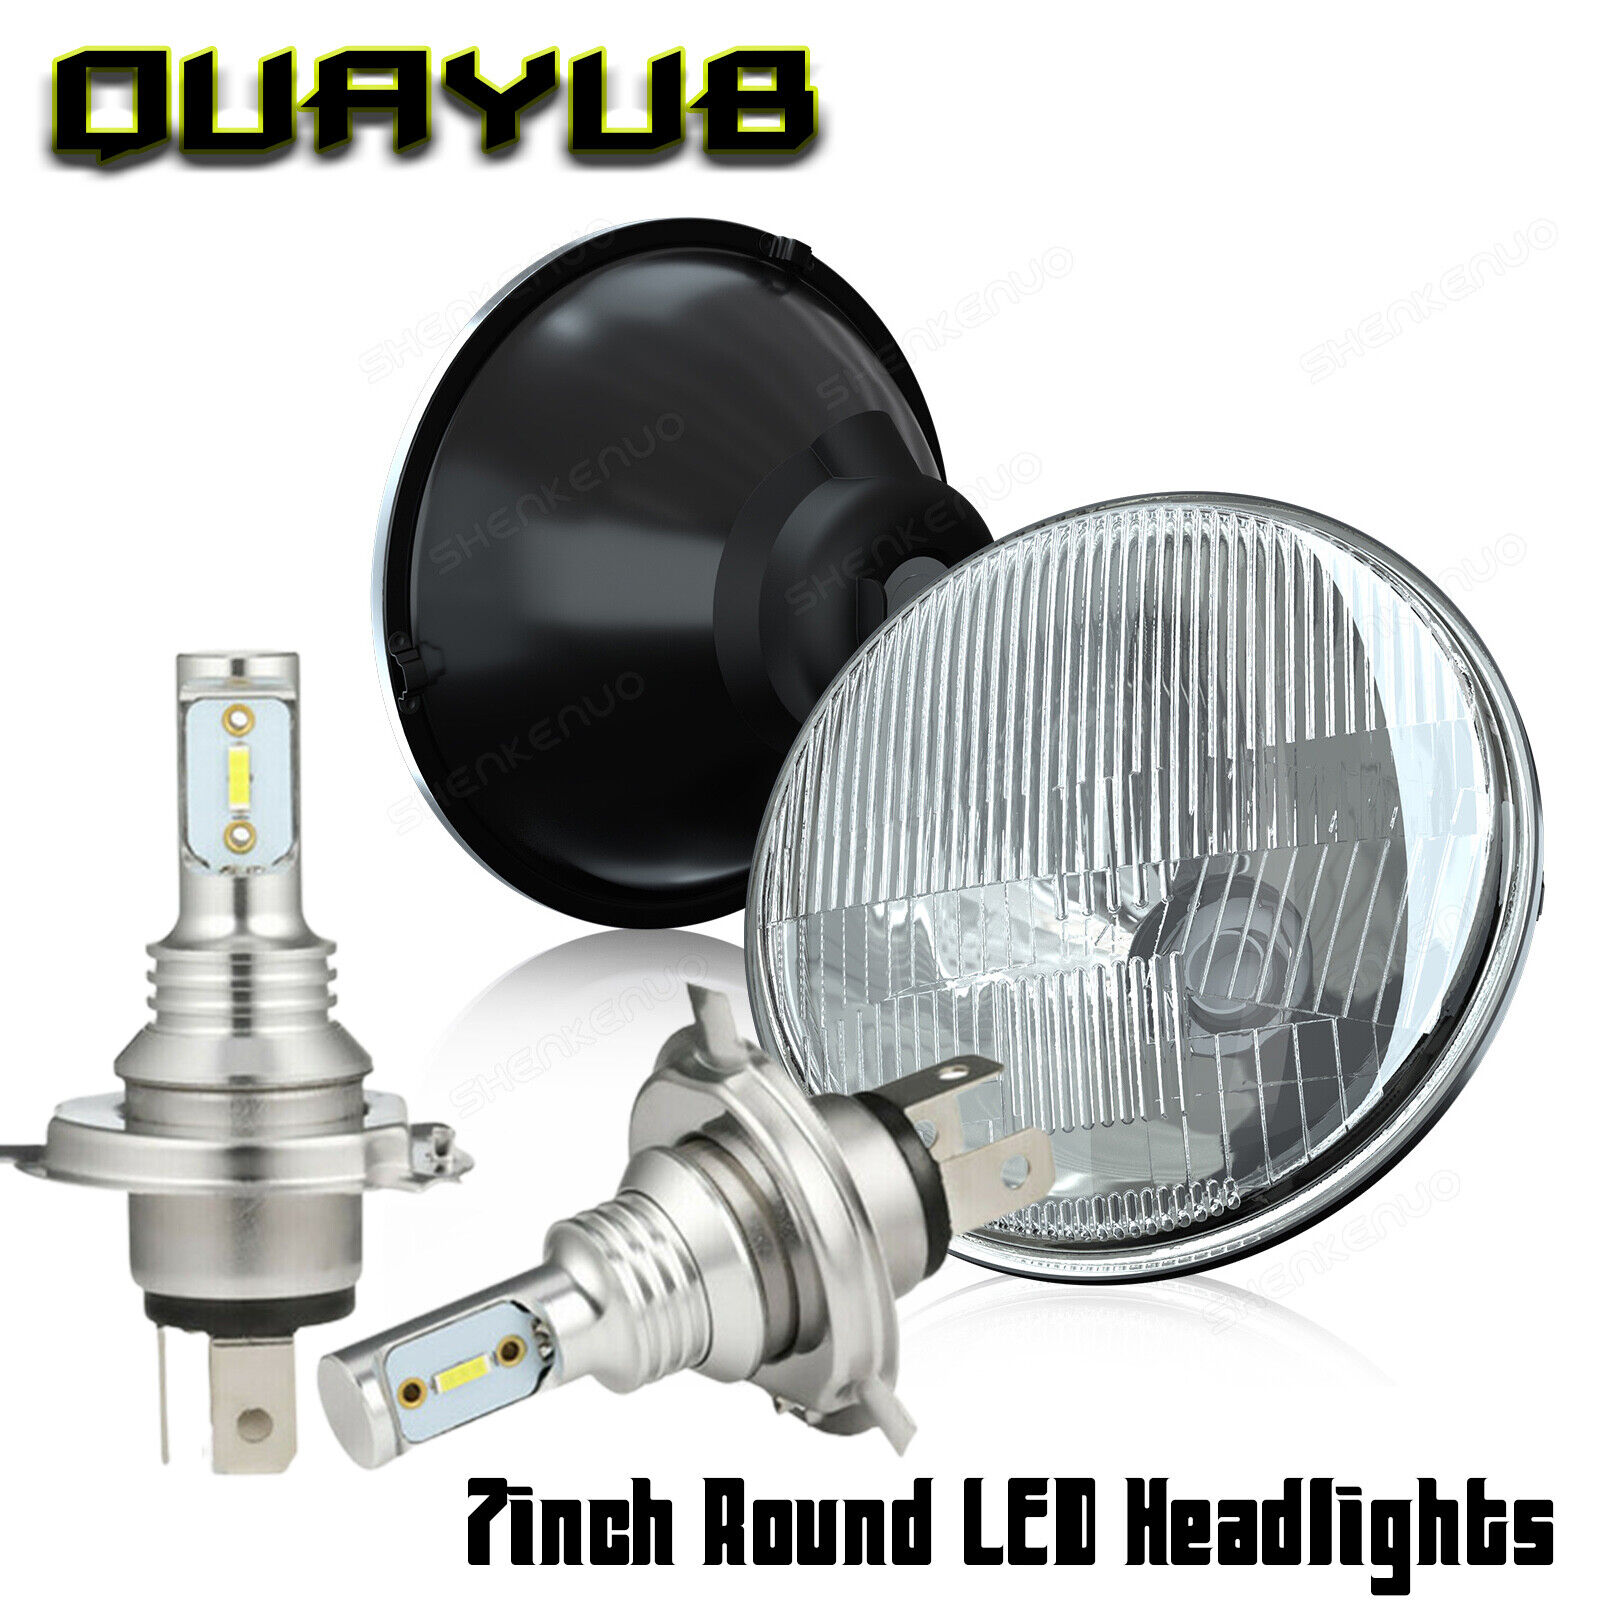 7 Inch LED Glass Headlight Round, ORIGINAL CLASSIC LOOK conversion Chrome pair